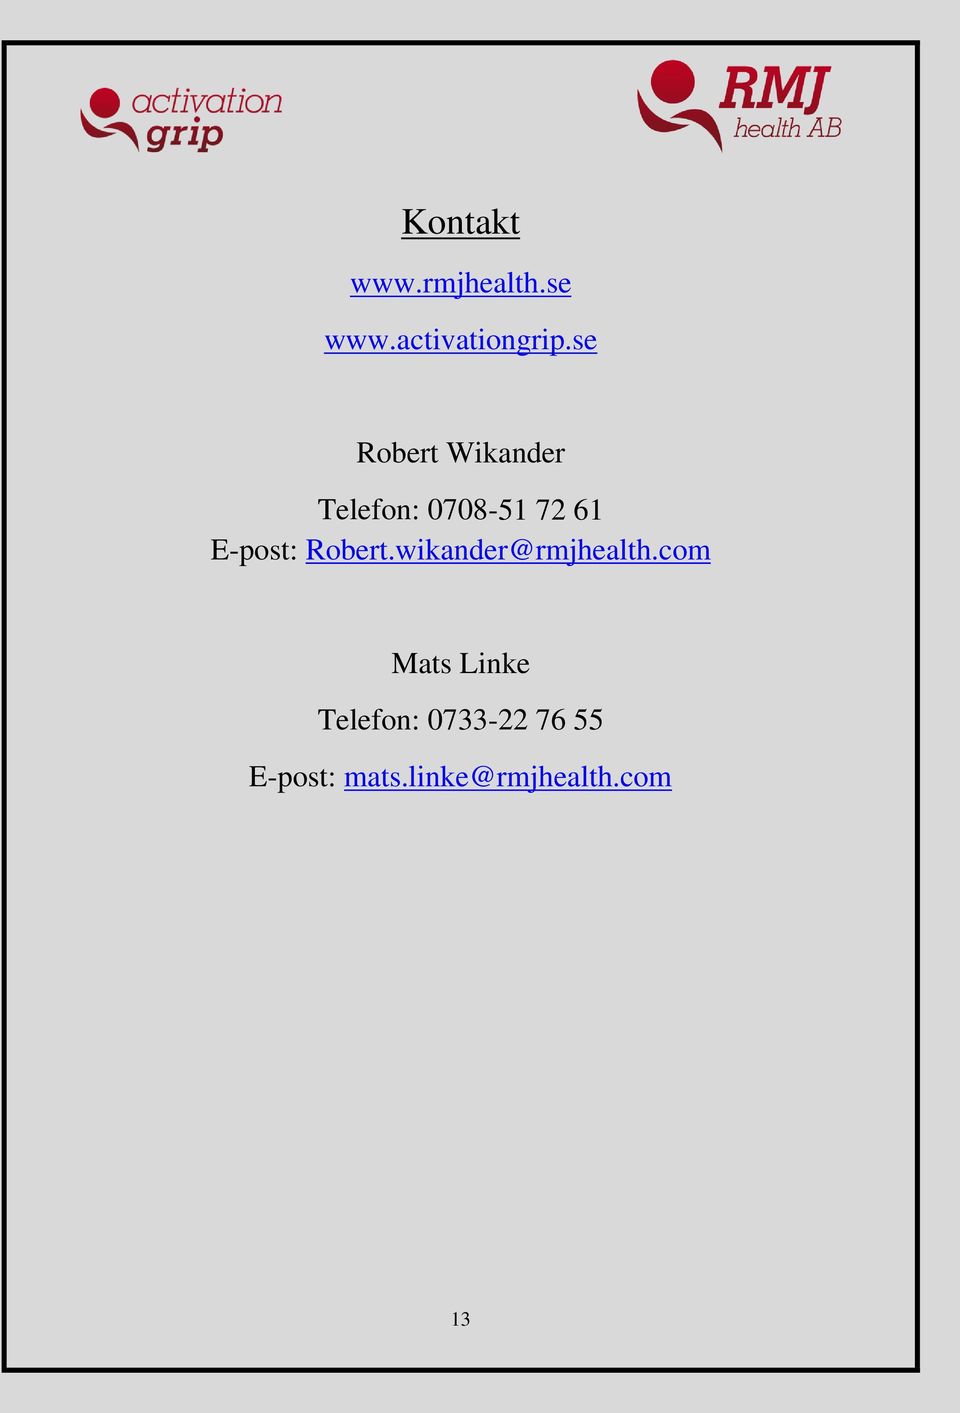 E-post: Robert.wikander@rmjhealth.